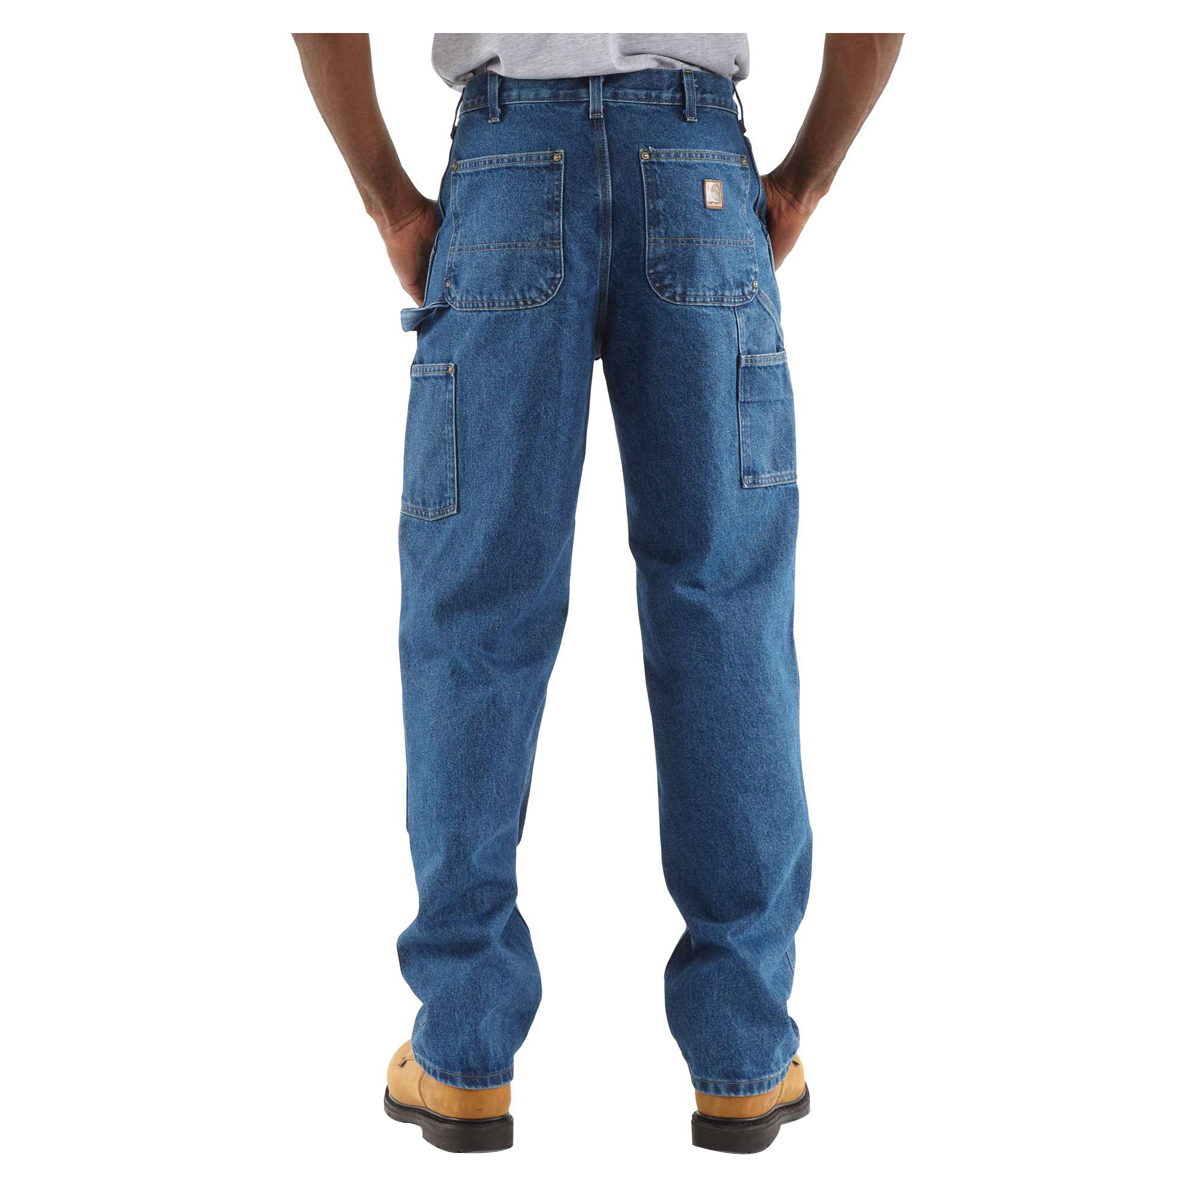 Carhartt B73-DST-40X30 Utility Logger Jeans, 40 in Waist, 30 in L Inseam, Darkstone, Loose Fit - 6